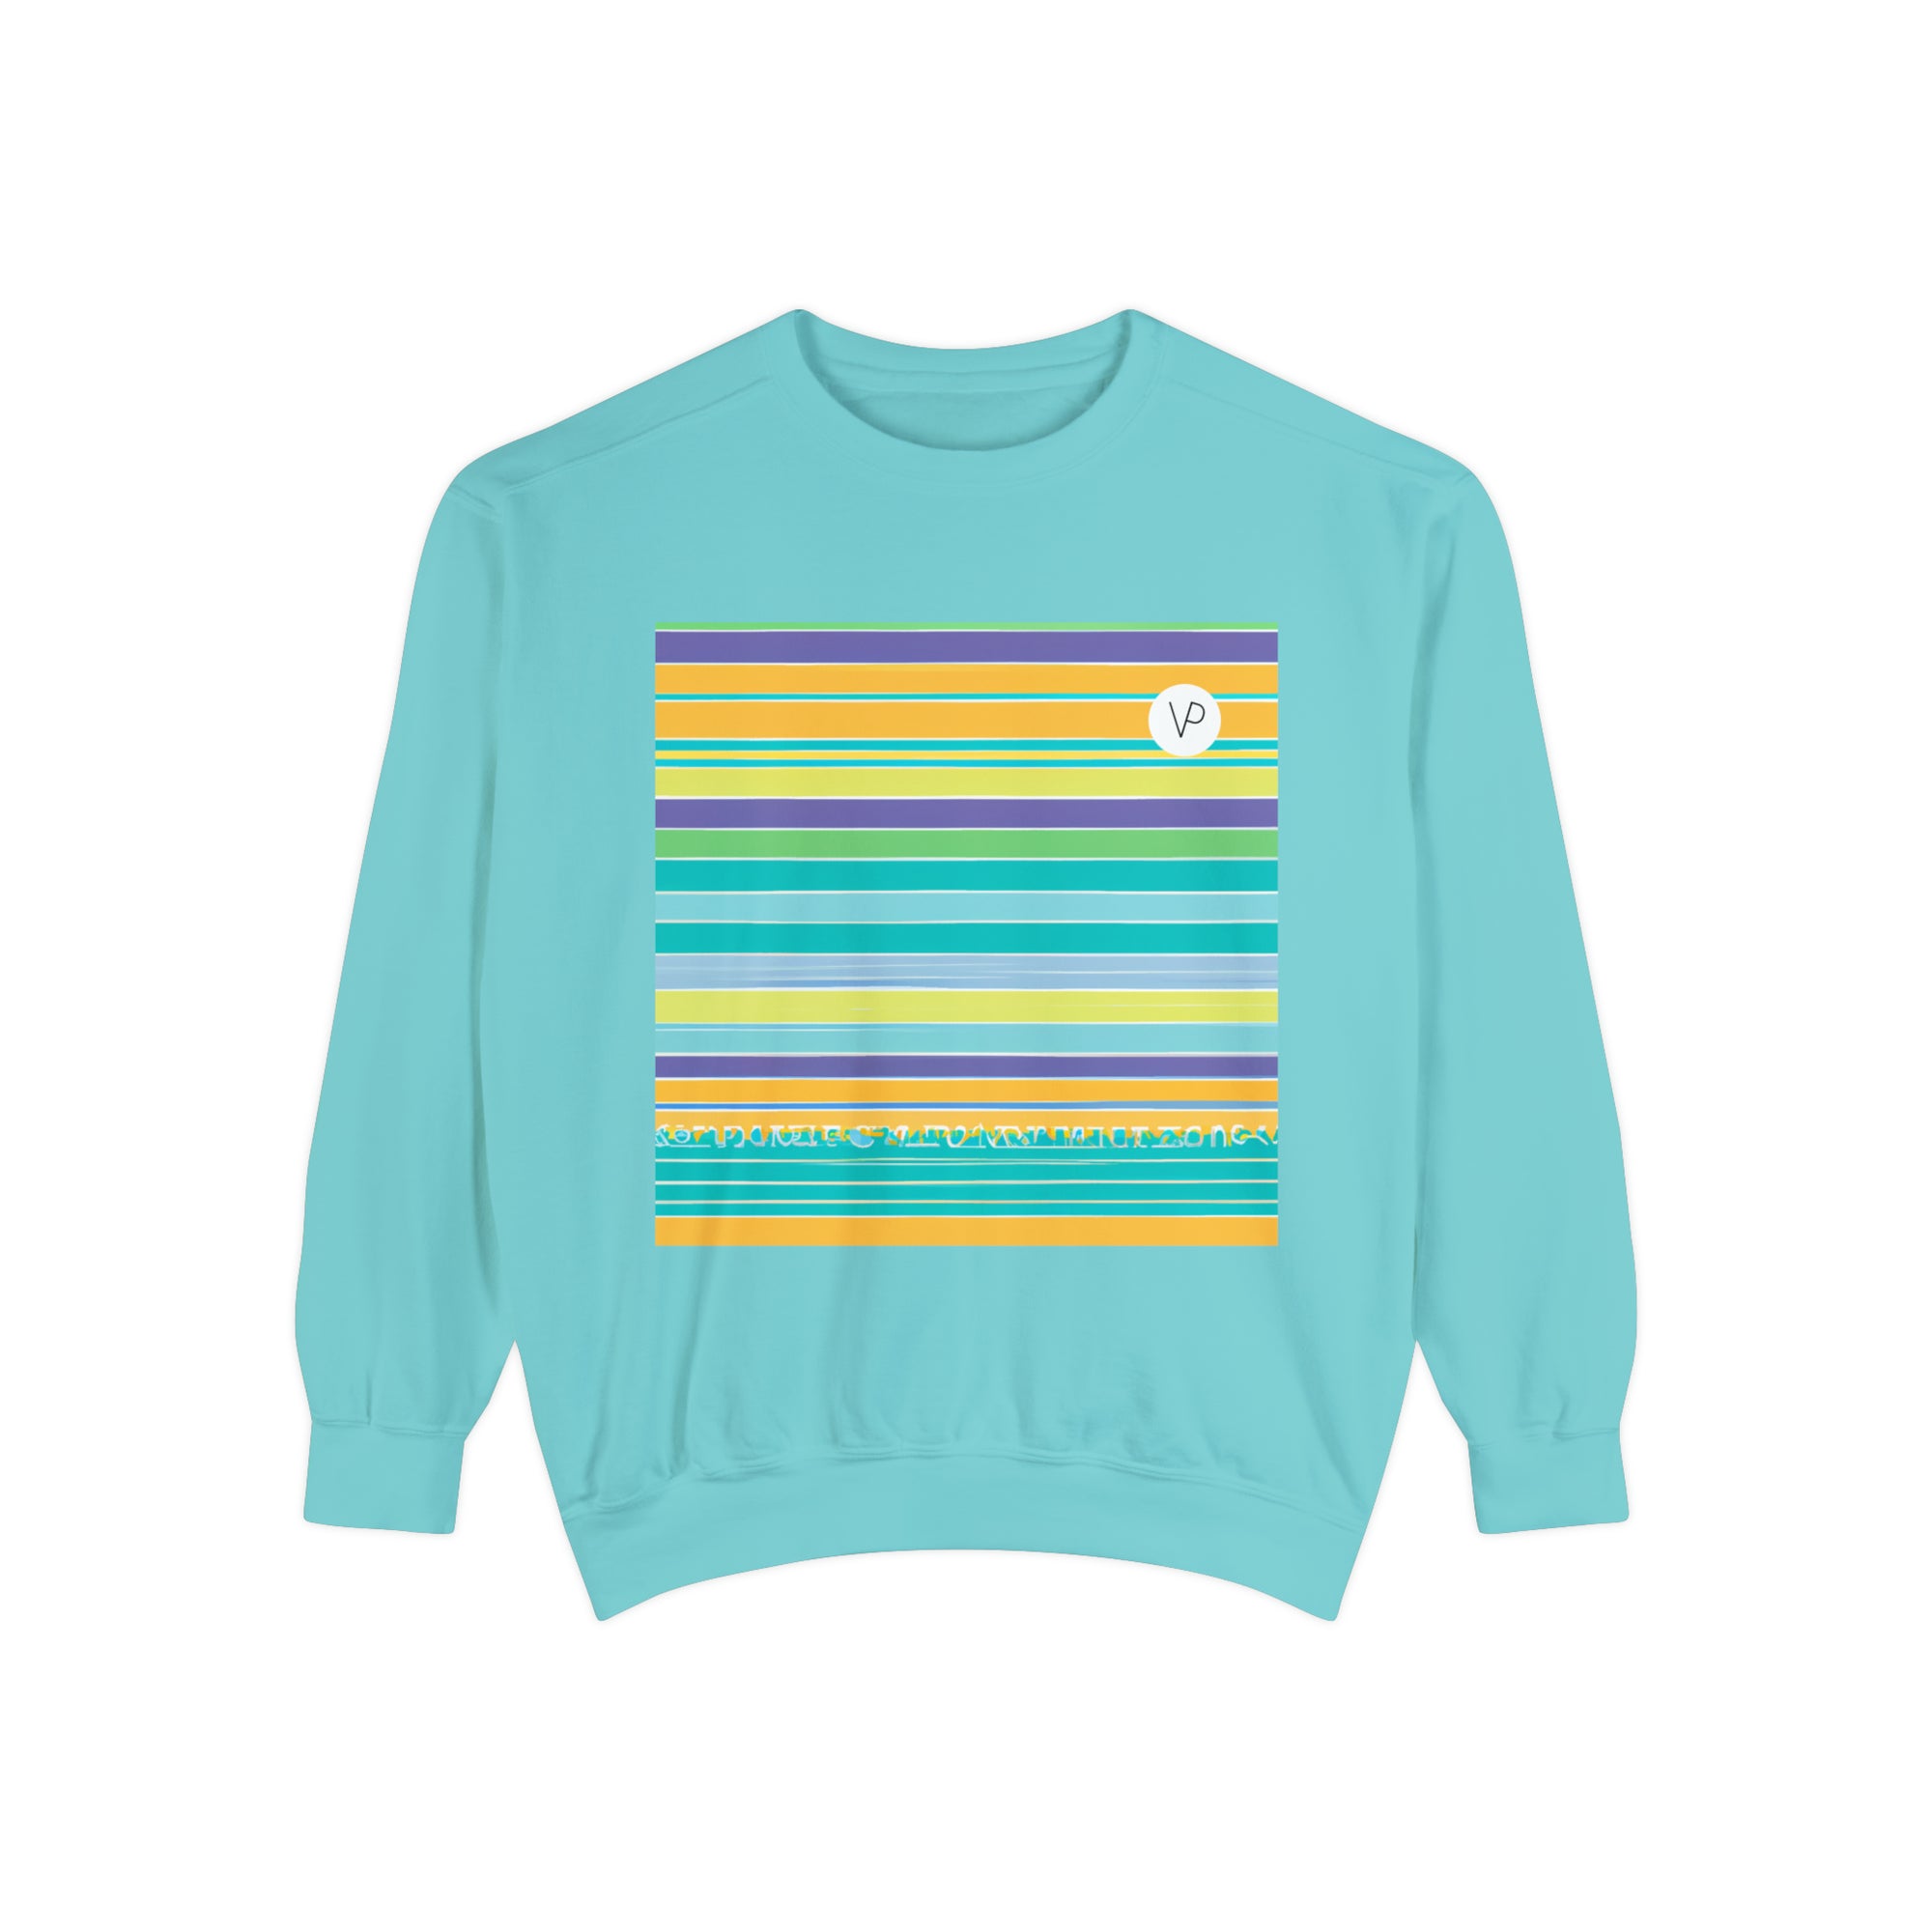 Empower Today - Sweatshirt Garment-Dyed